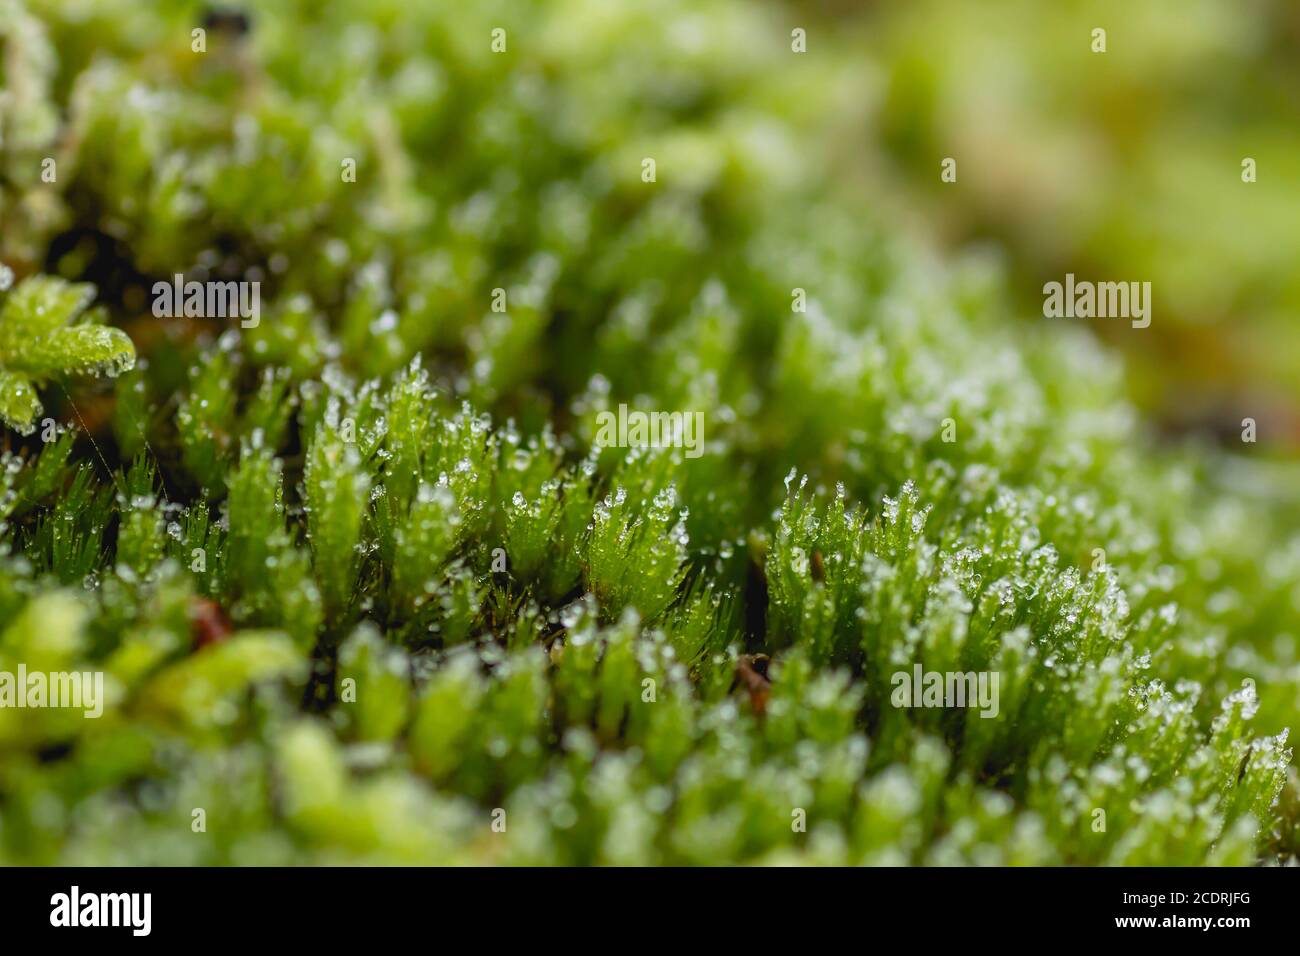 Fresh green forest moss Stock Photo